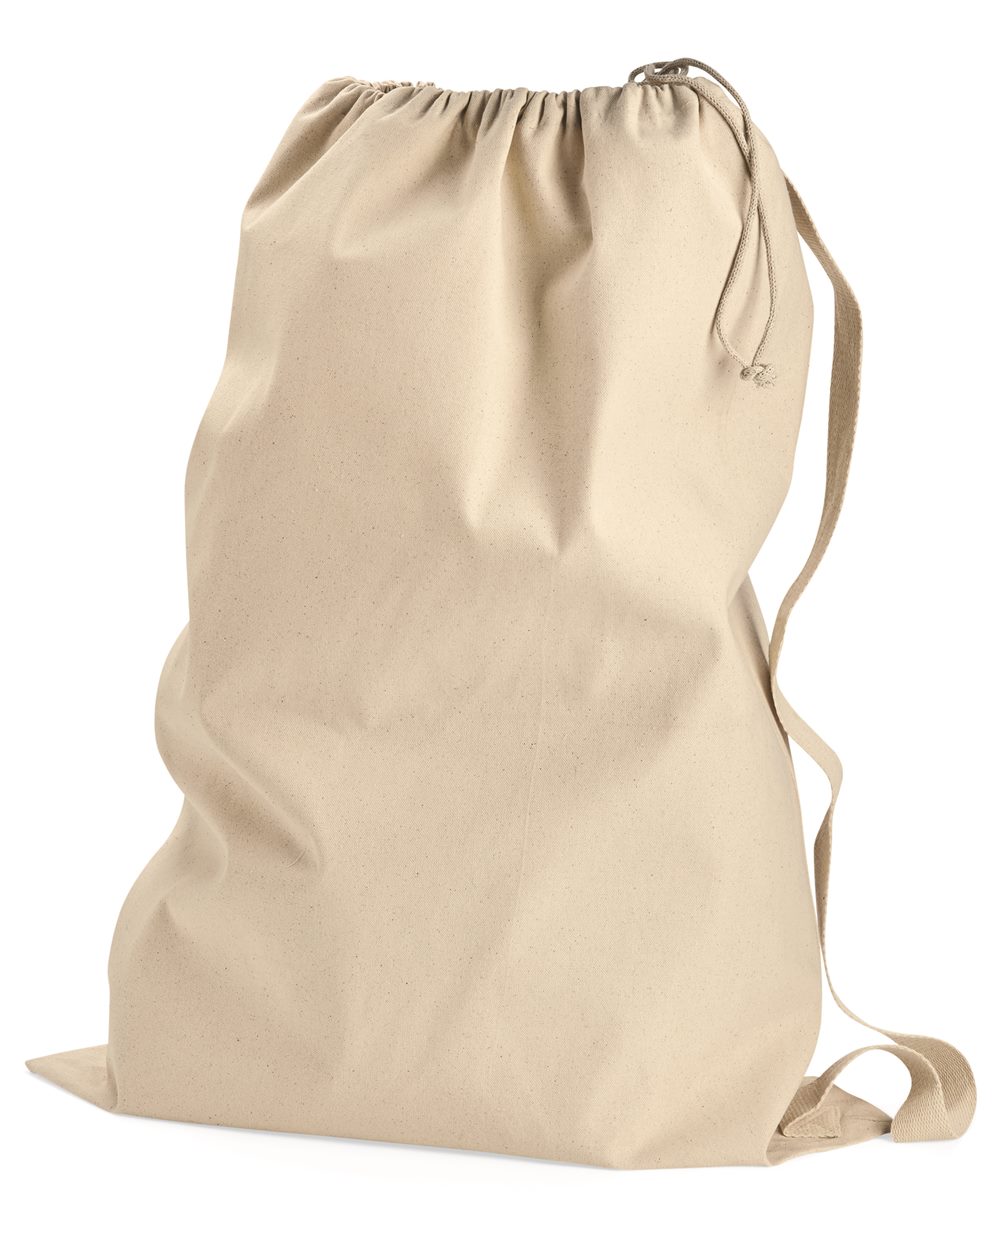 OAD OAD110 - Large Laundry Bag $8.51 - Bags